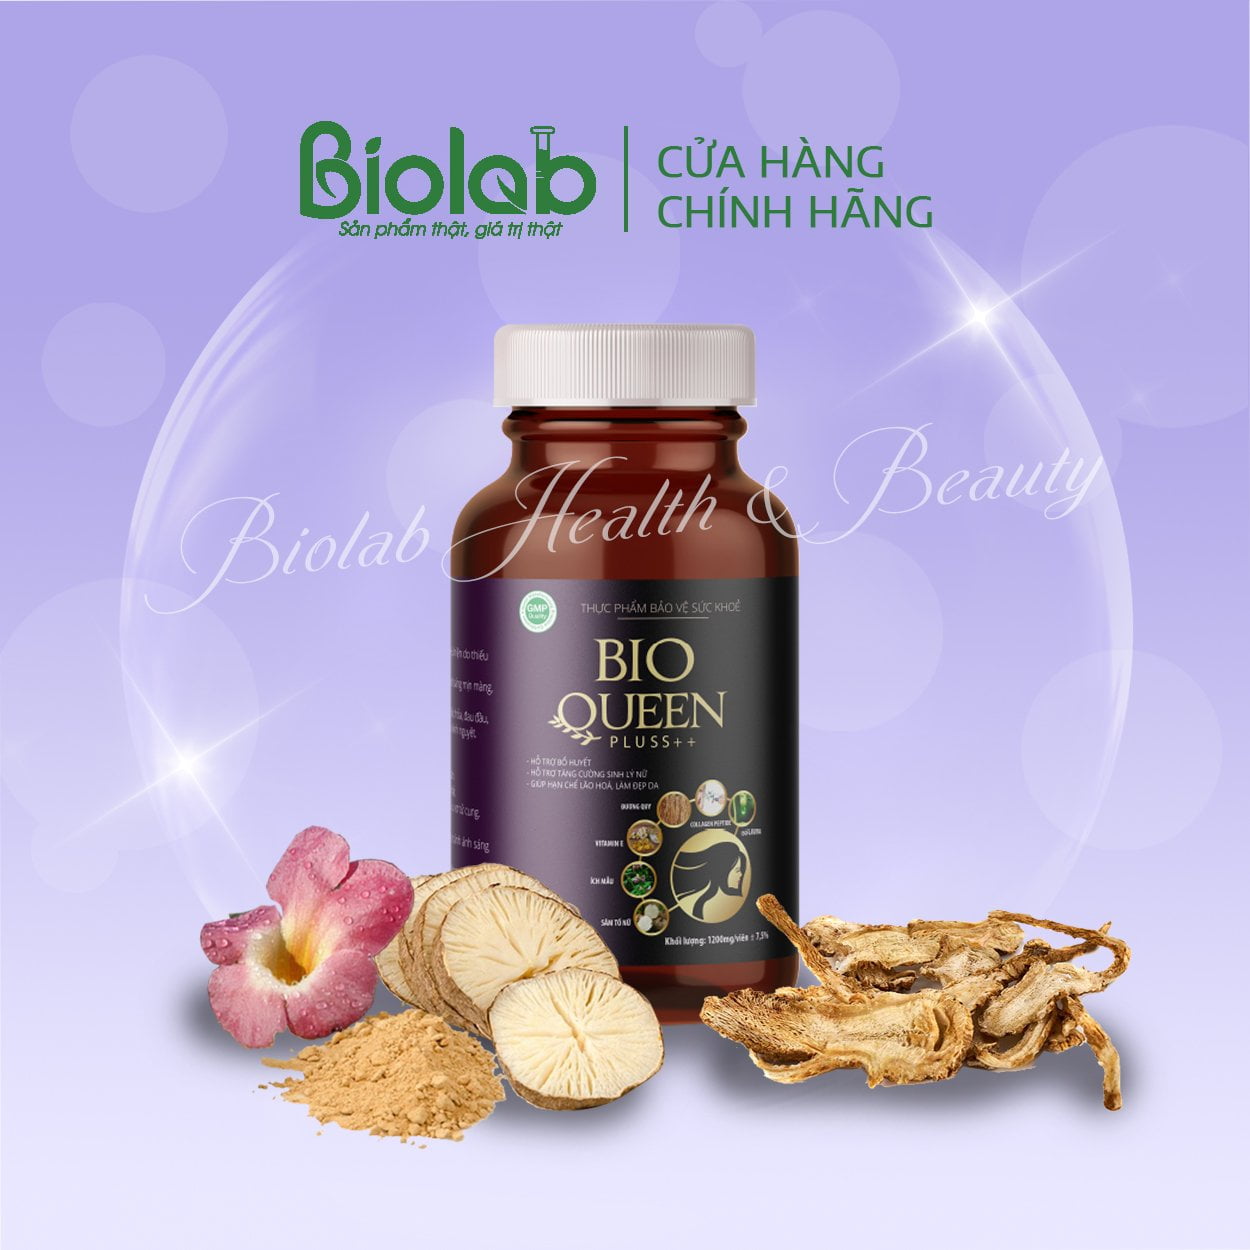 Bio Queen Pluss++ giúp cải thiện triệu chứng của suy giảm nội tiết tố nữ